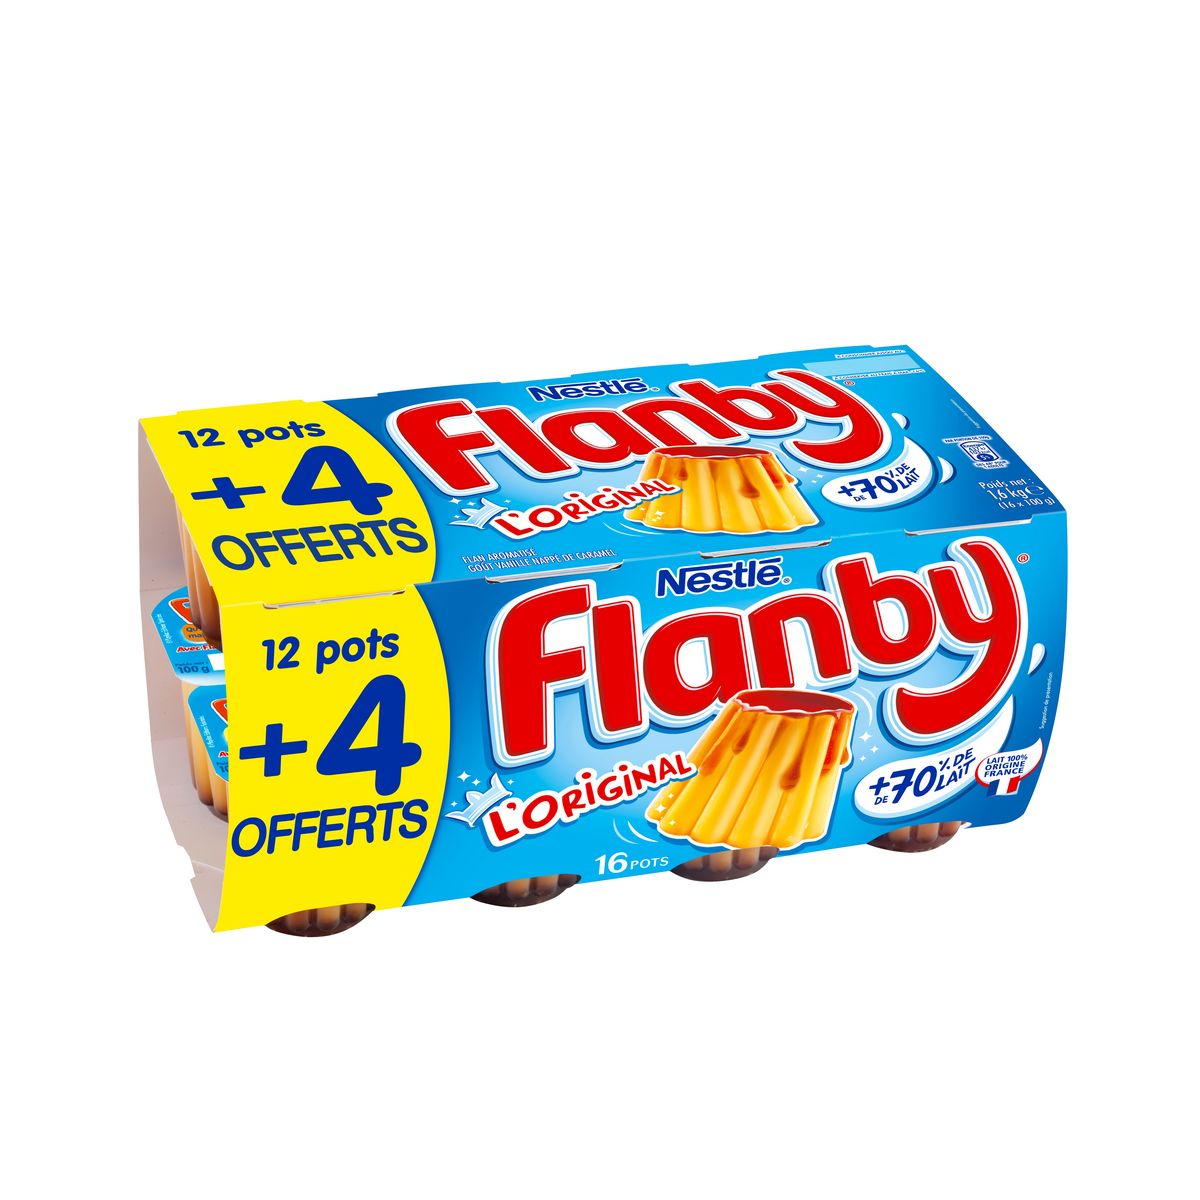 FLANBY Flan nappés au caramel 12+4 offerts 16x100g